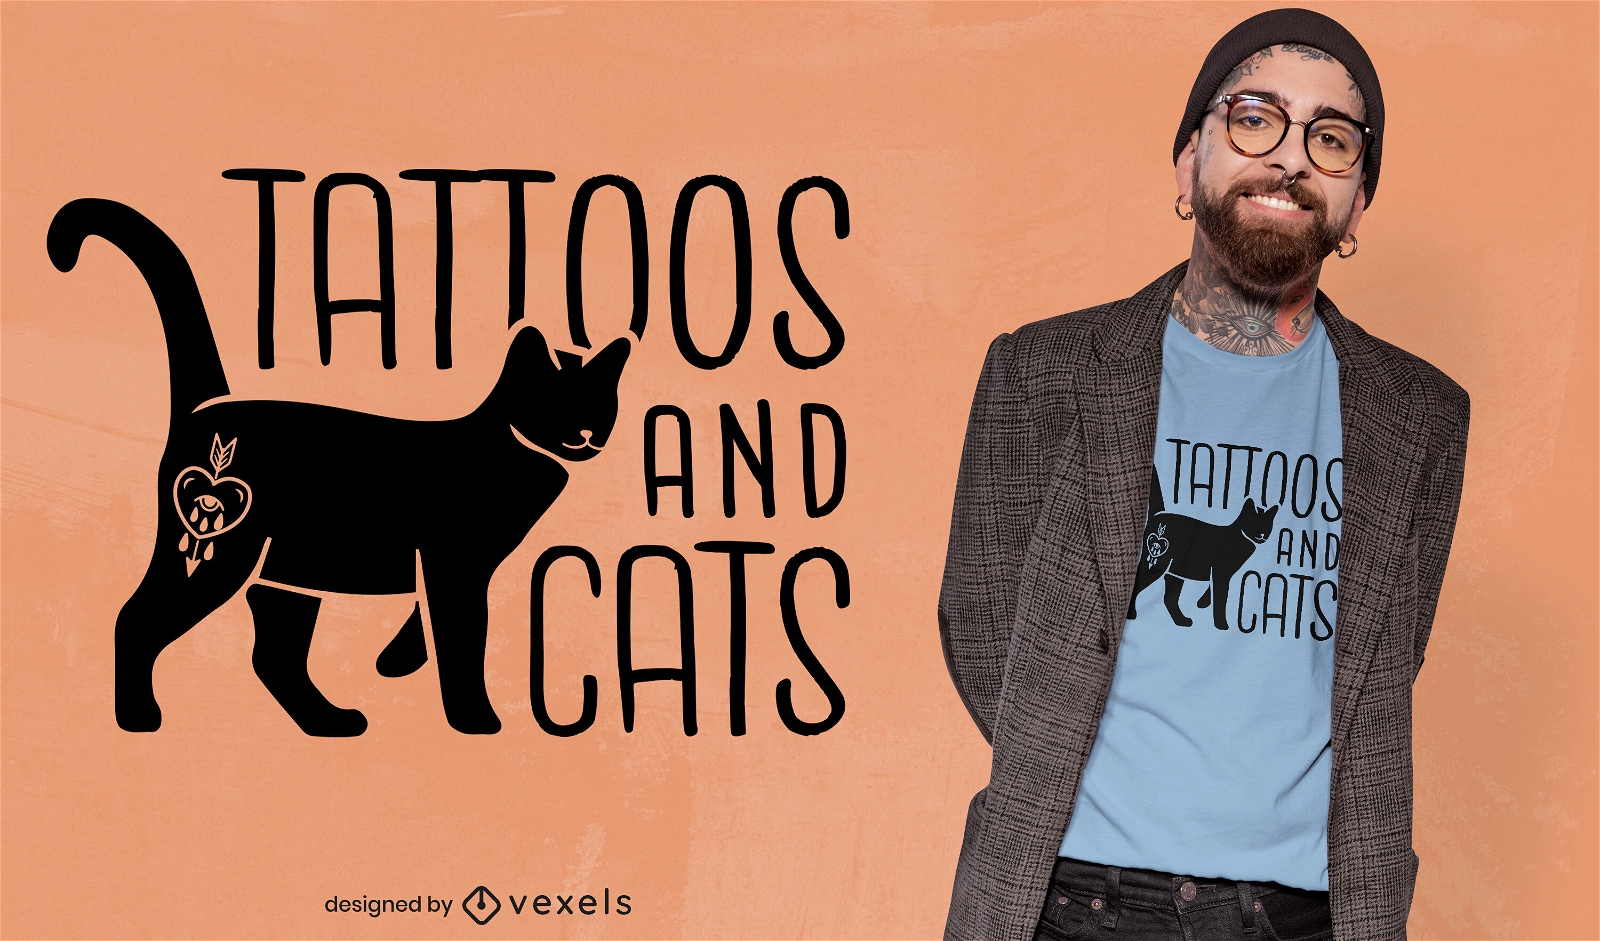 Dise?o de camiseta de tatuajes y gatos.